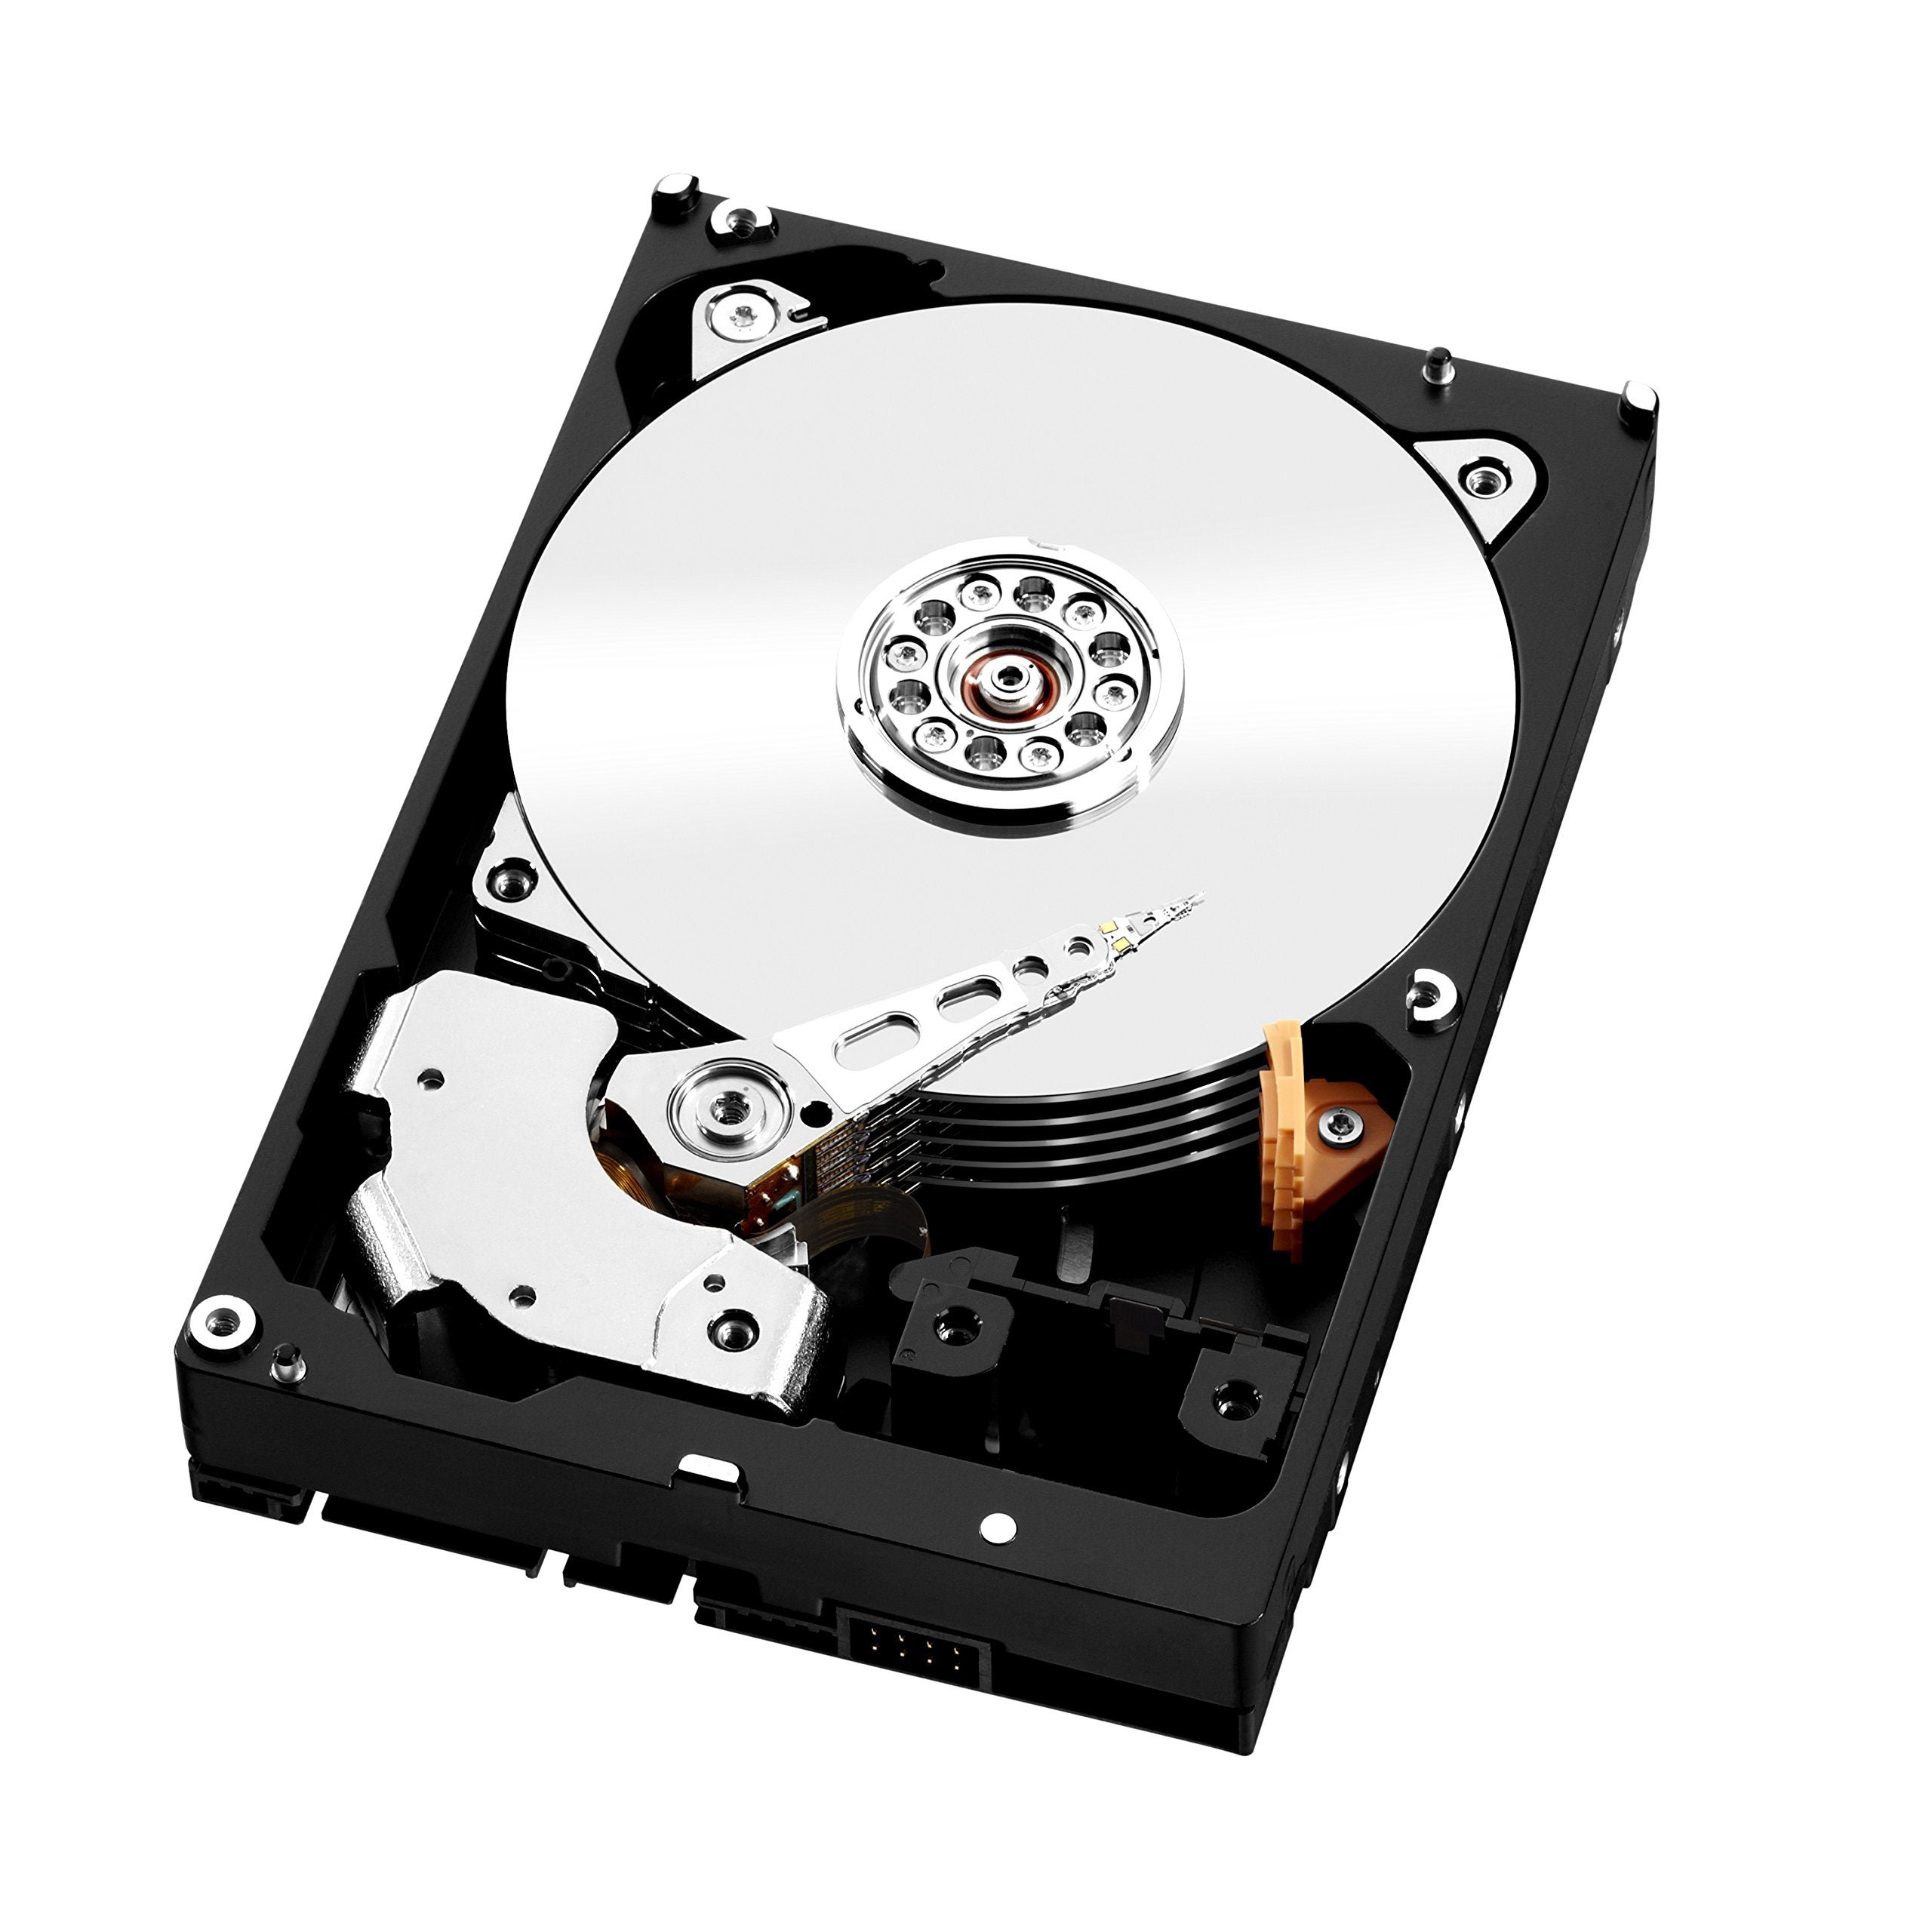 Western Digital Pro 3.5 inch SATA Internal Desktop Hard Drive for 1-16 Bay Network Attached Storage - Red